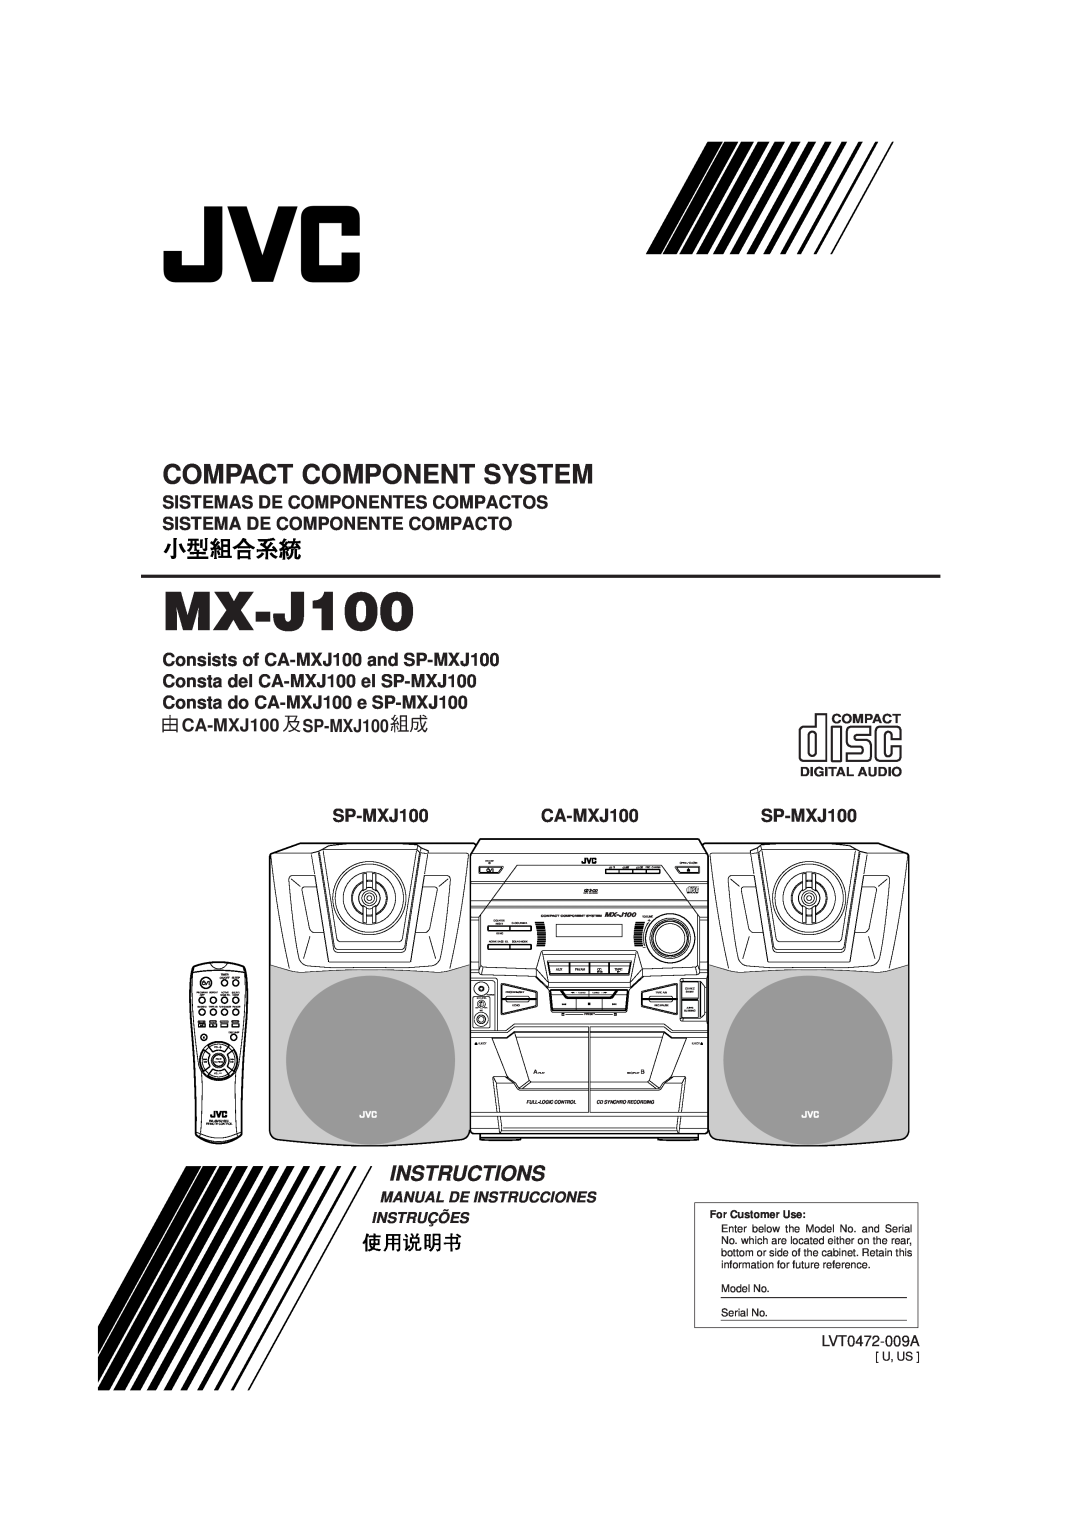 JVC MX-J100 manual Compact Component System, Instructions, SP-MXJ100, Manual De Instrucciones Instruções, LVT0472-009A 